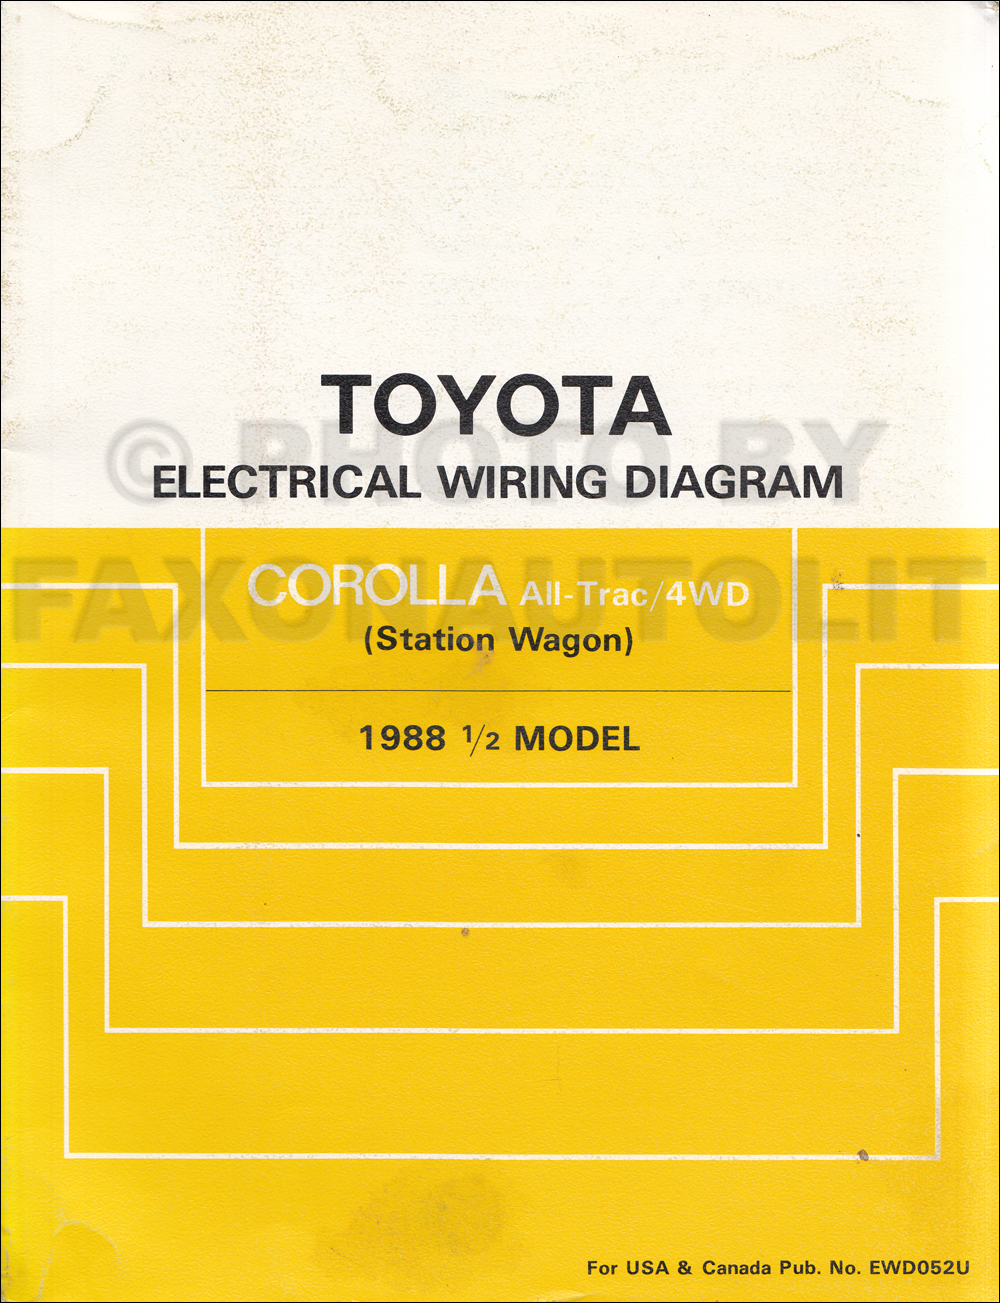 1988 Toyota Corolla All-Trac/4WD Station Wagon Wiring Diagram Manual Original